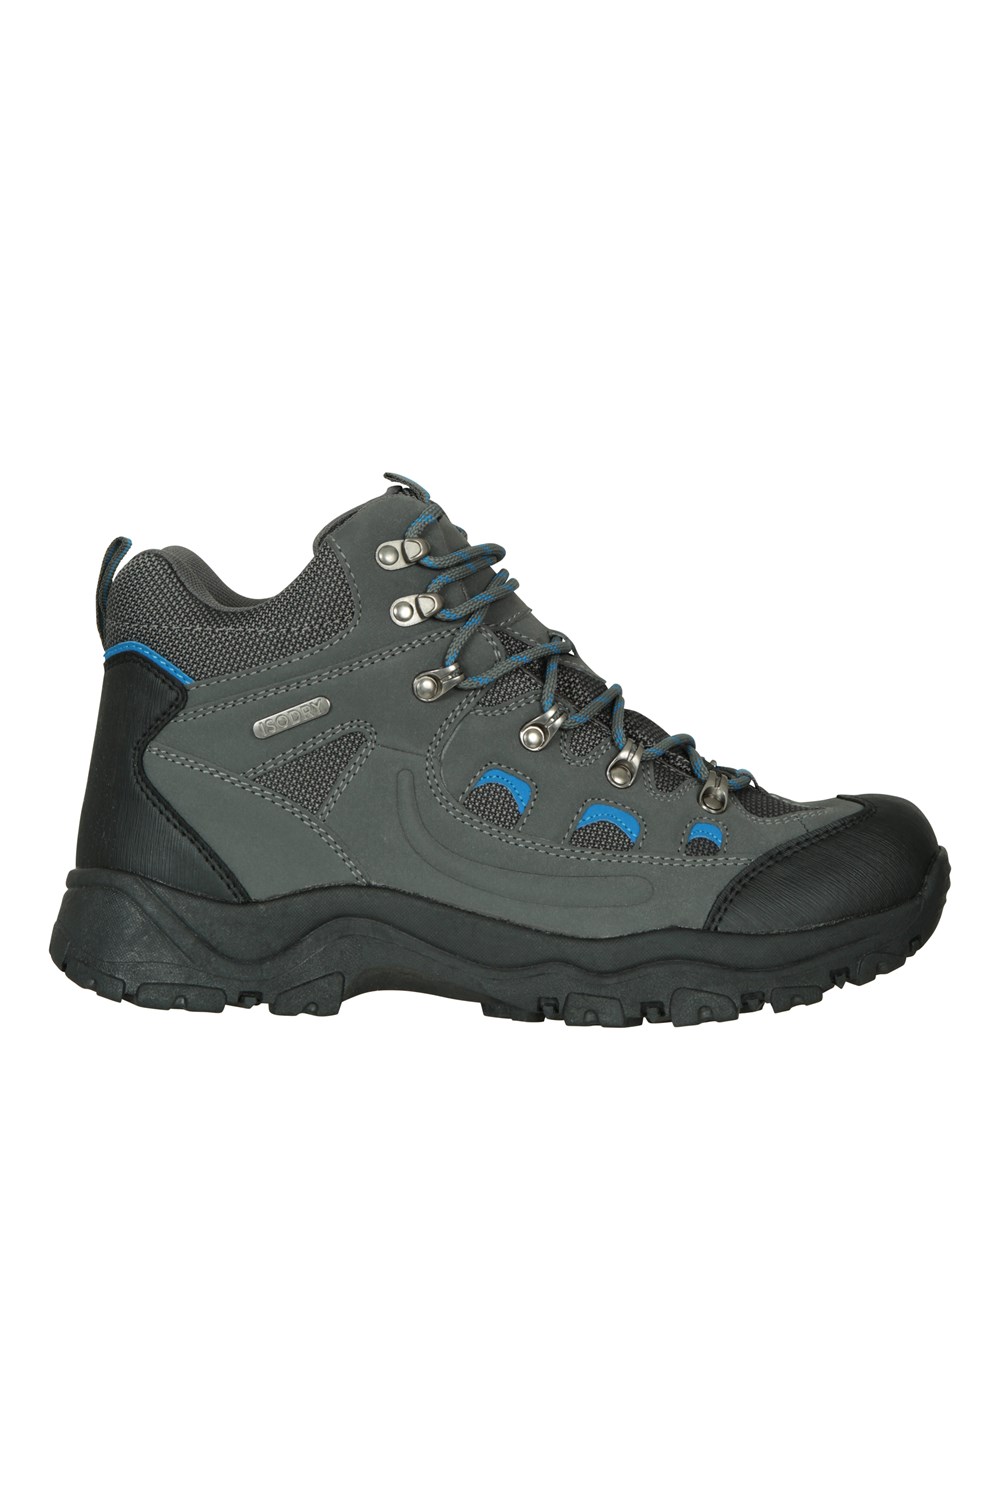 Mountain Warehouse Mens Waterproof Hiking Boots Walking Trekking ...